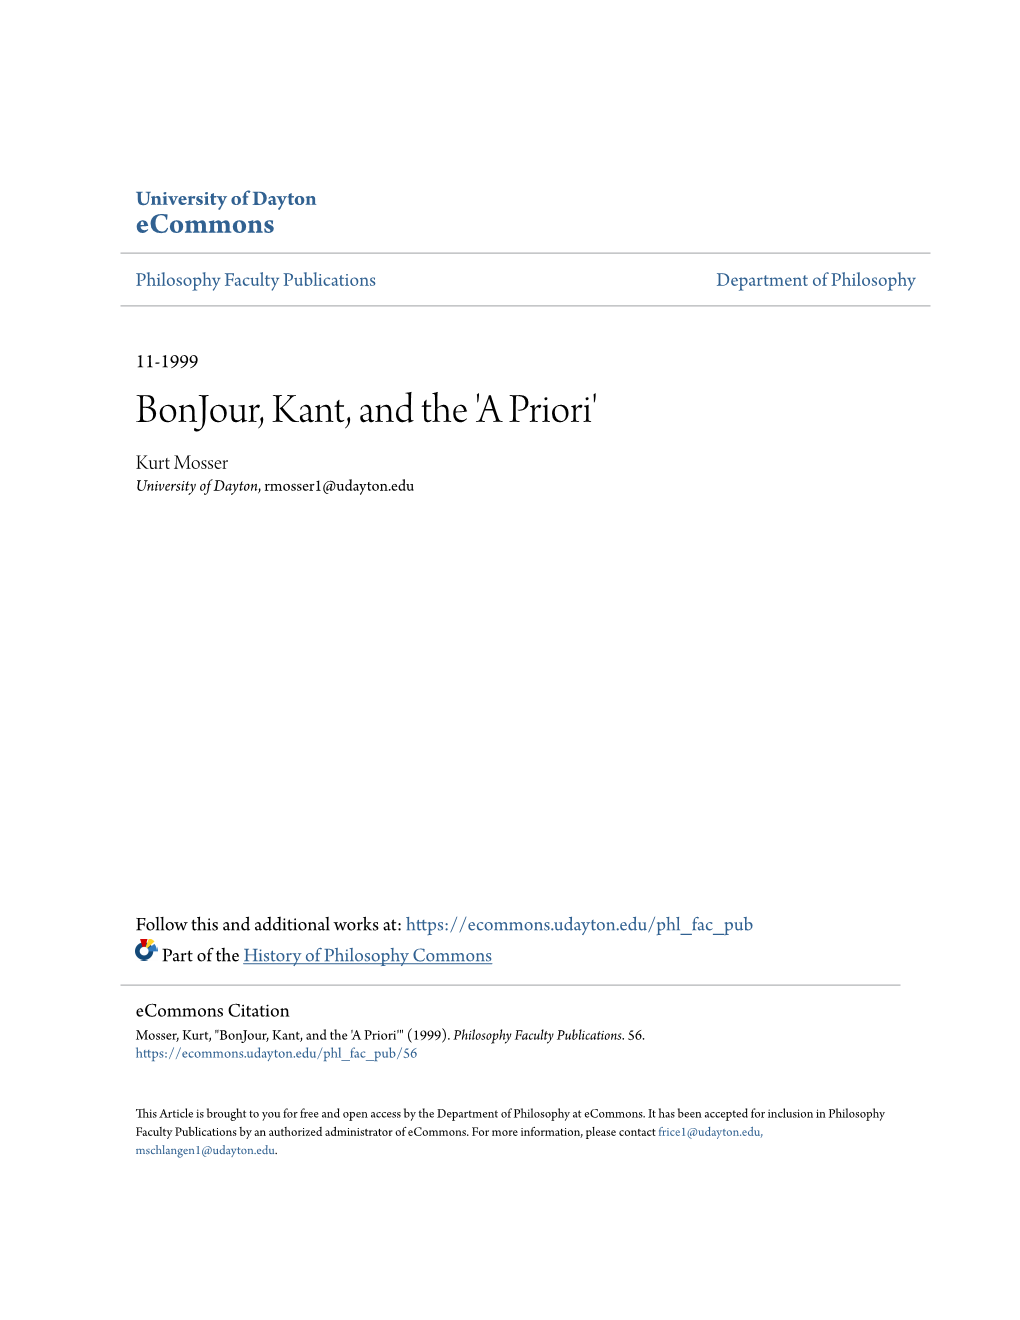 Bonjour, Kant, and the 'A Priori' Kurt Mosser University of Dayton, Rmosser1@Udayton.Edu